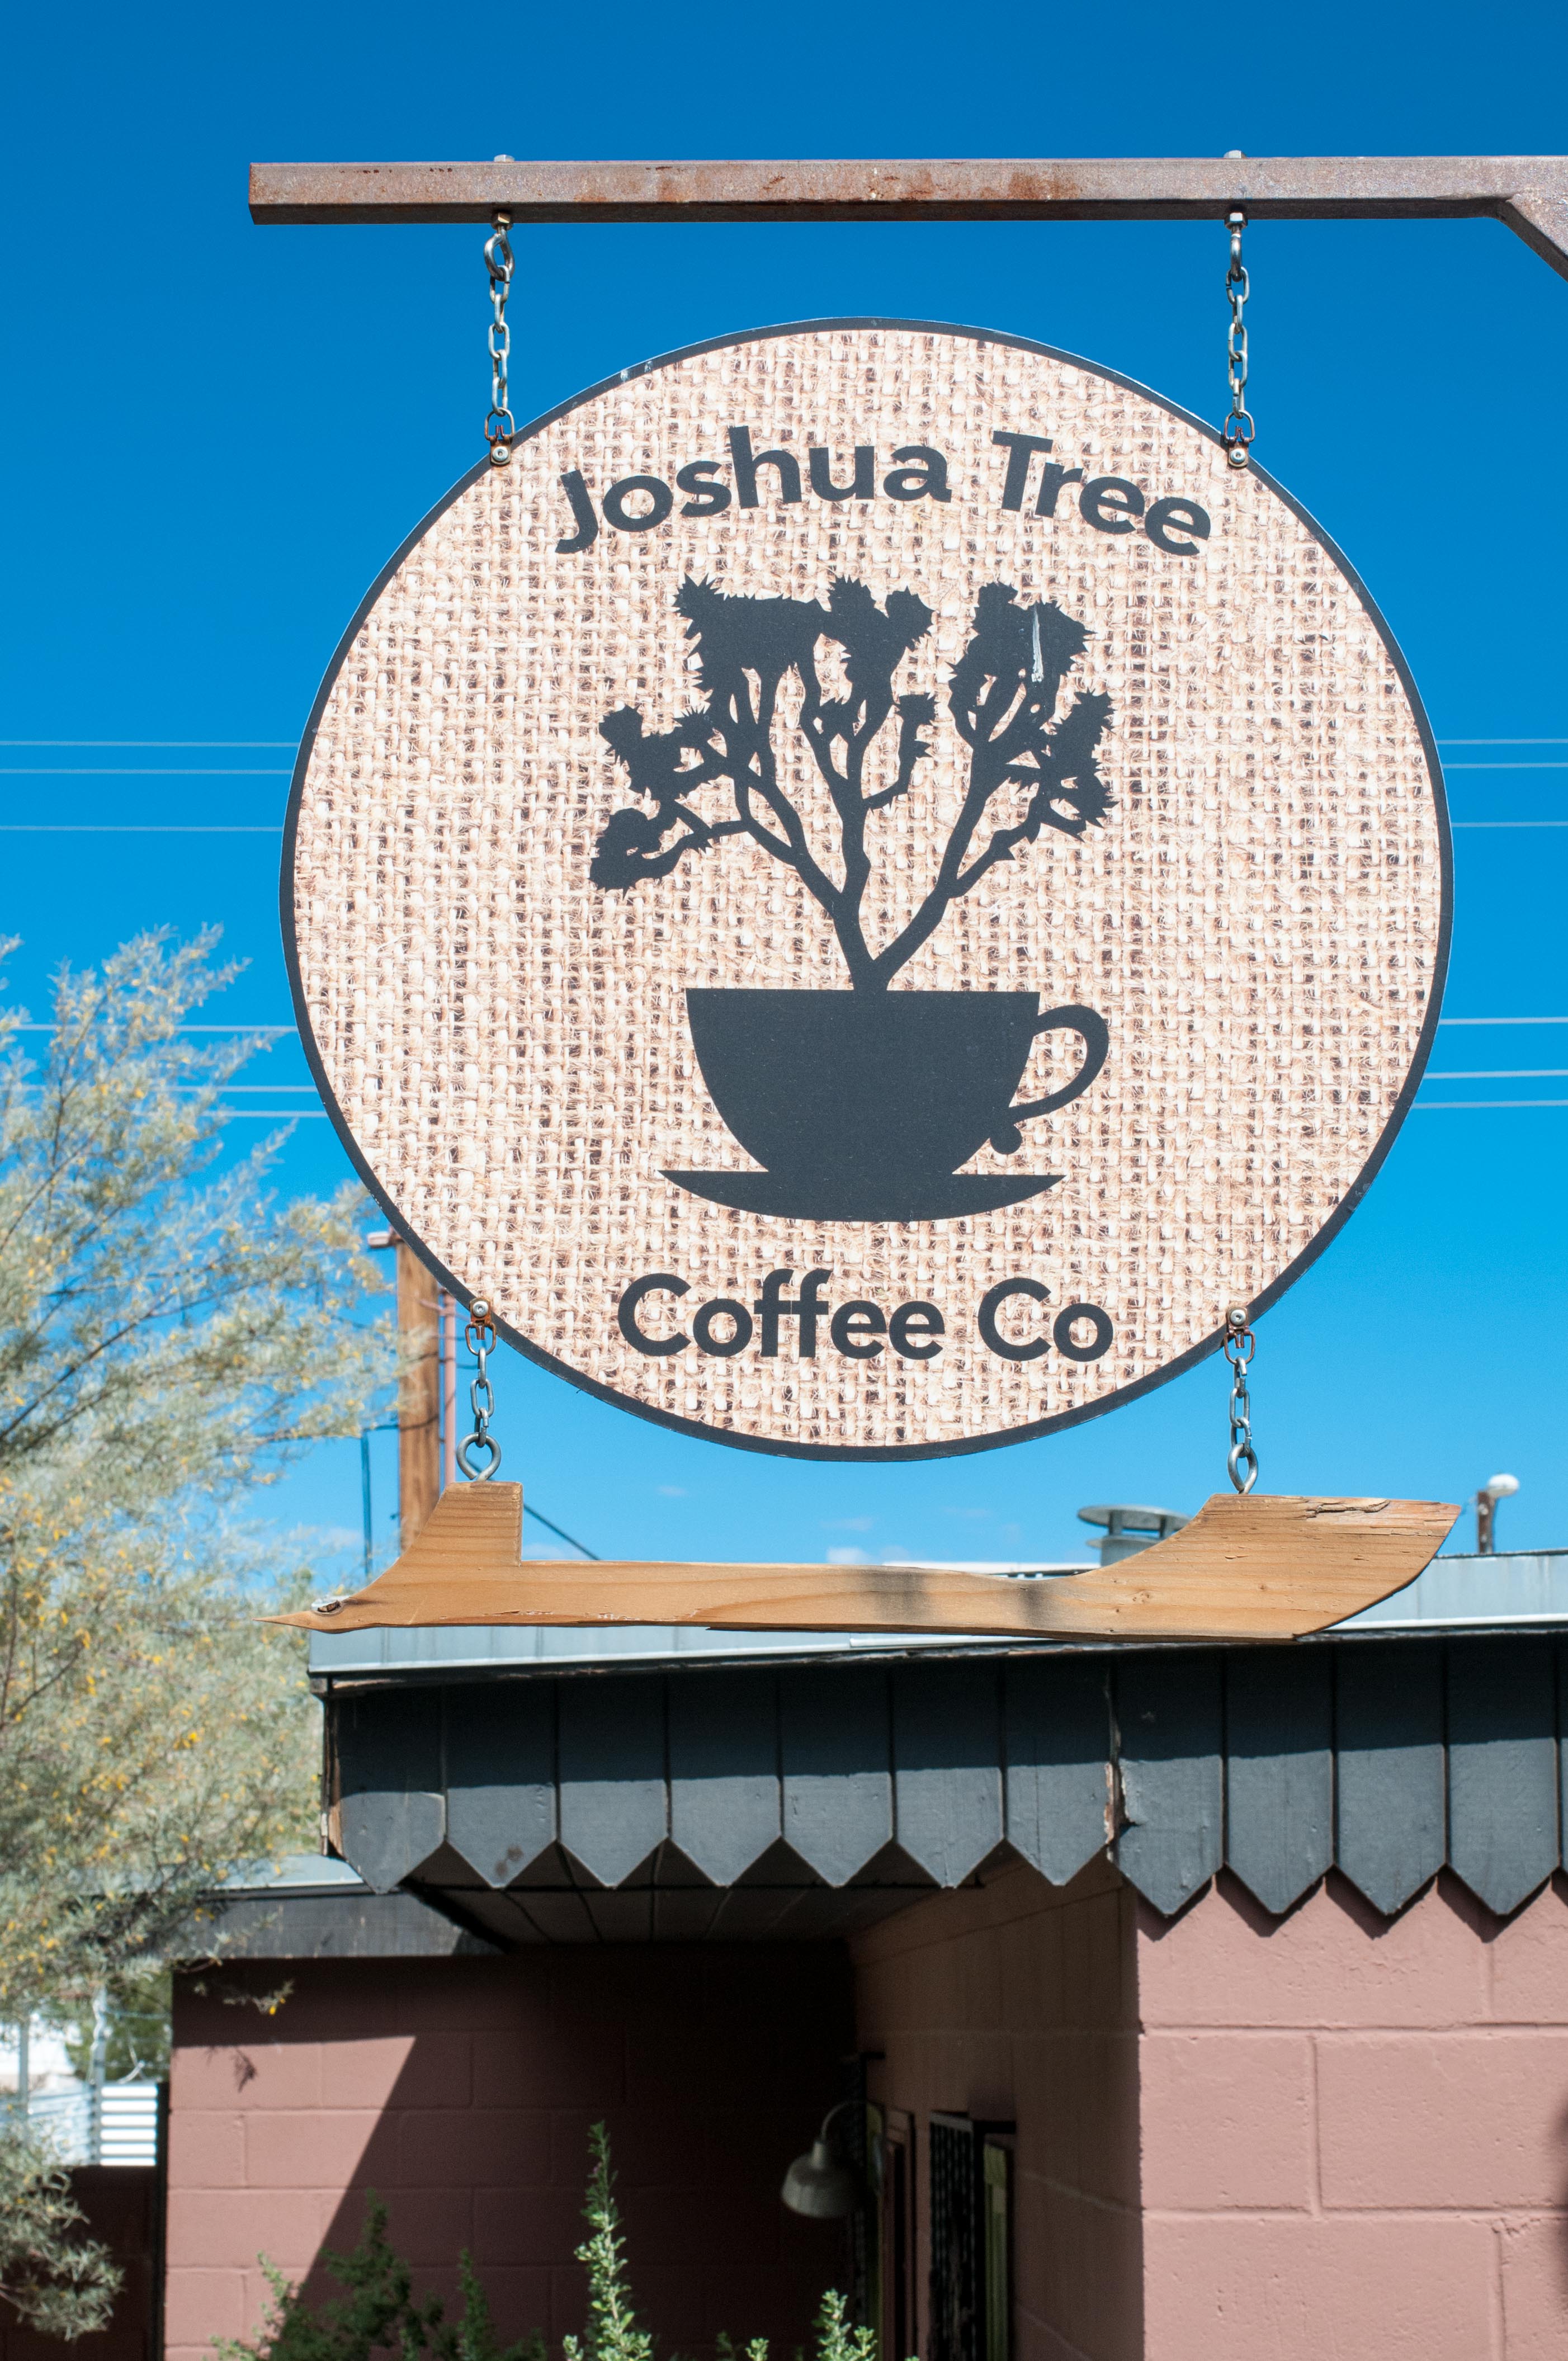 Joshua tree coffee co sign